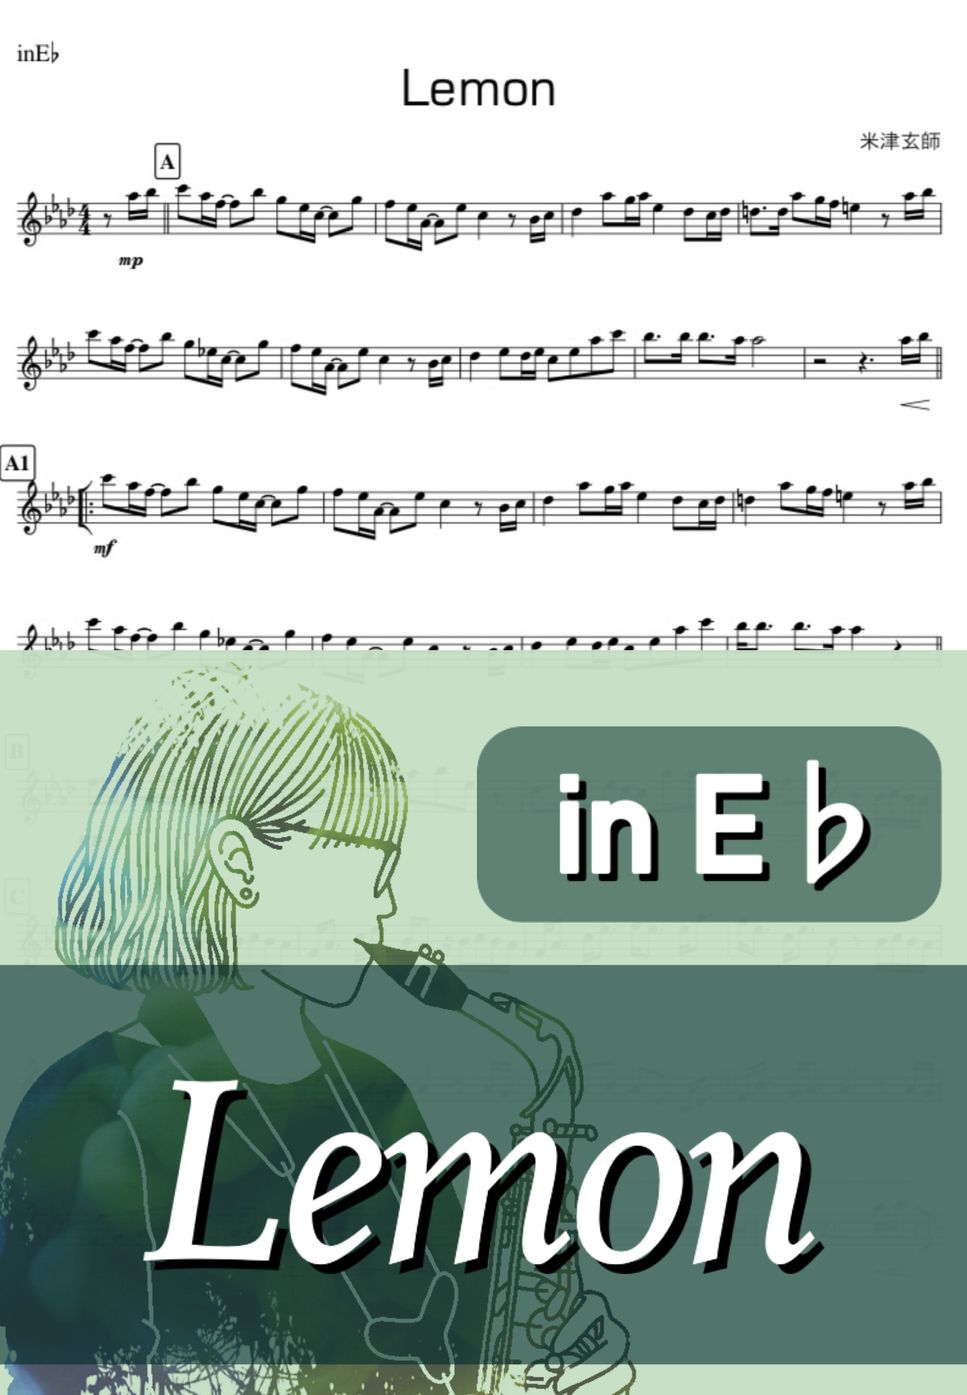 米津玄師 - Lemon (E♭) by kanamusic